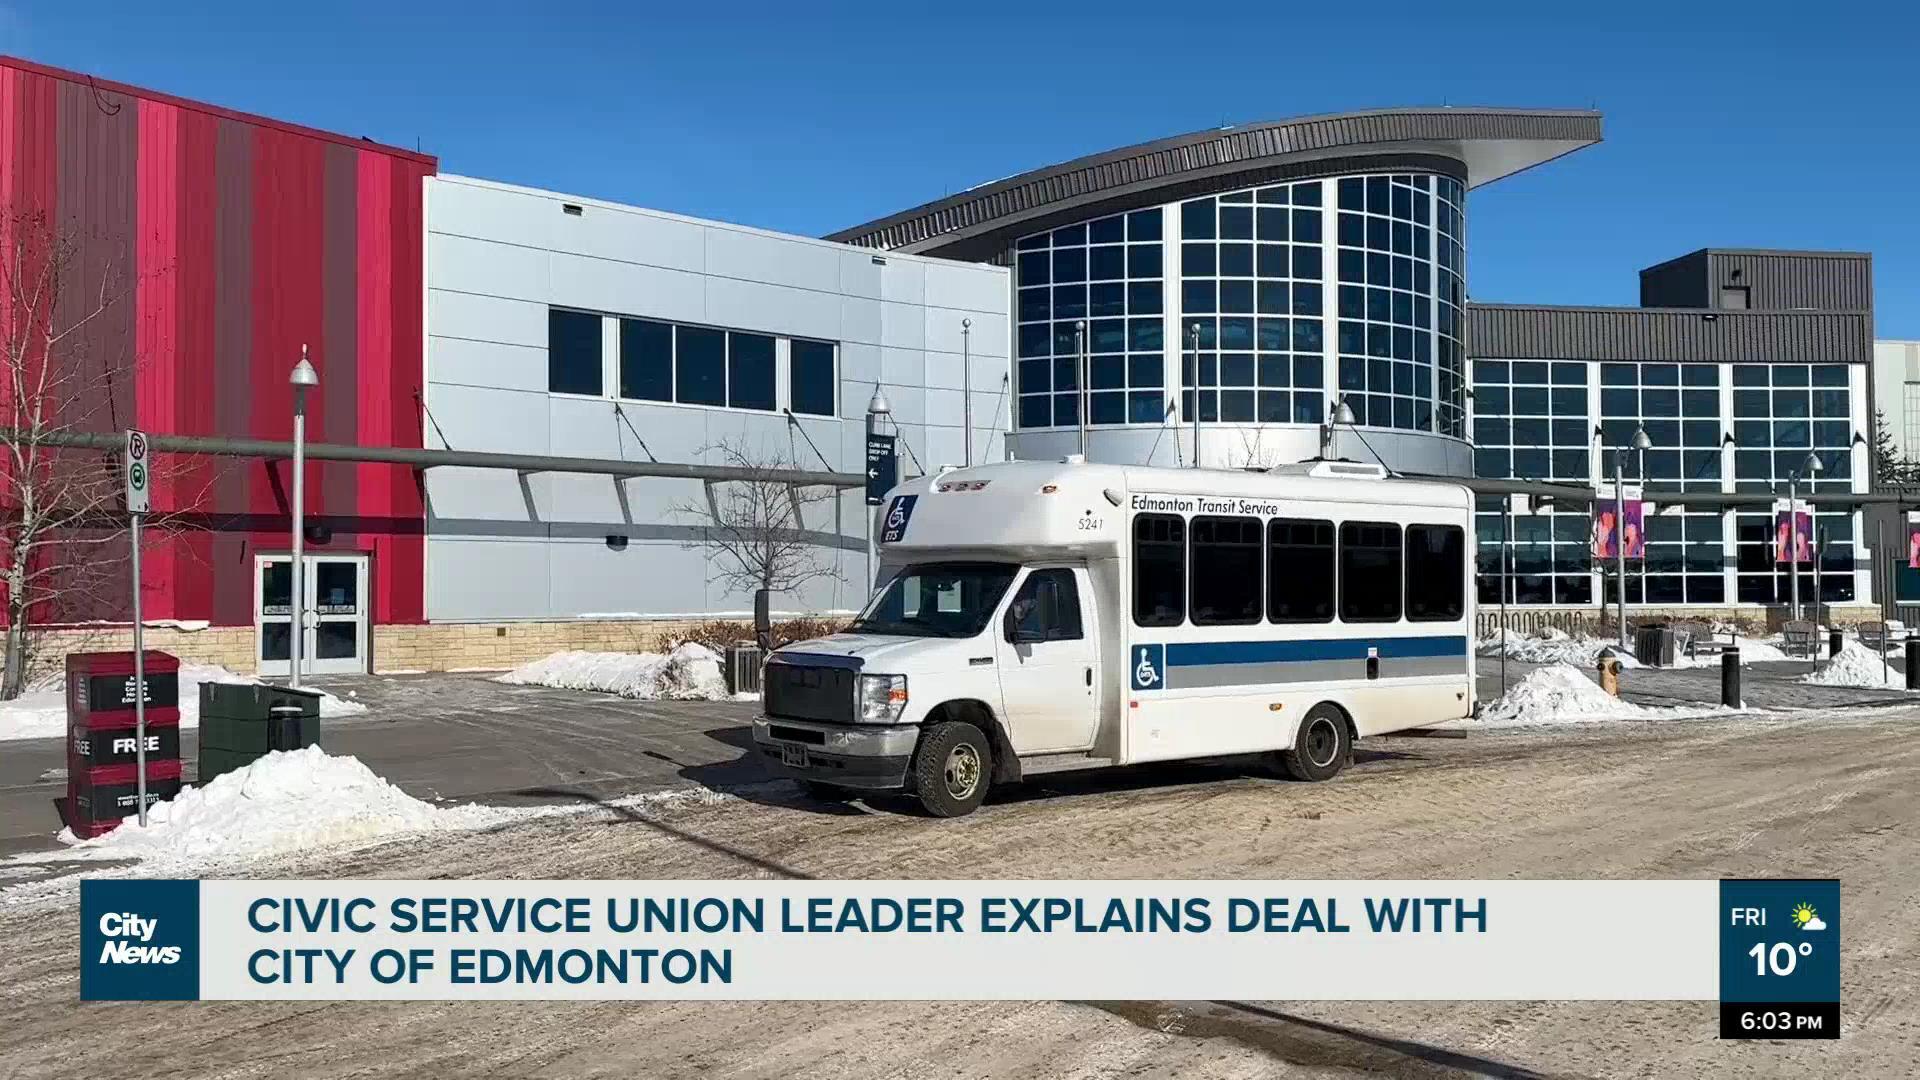 Civic service union leader explains deal with city of Edmonton